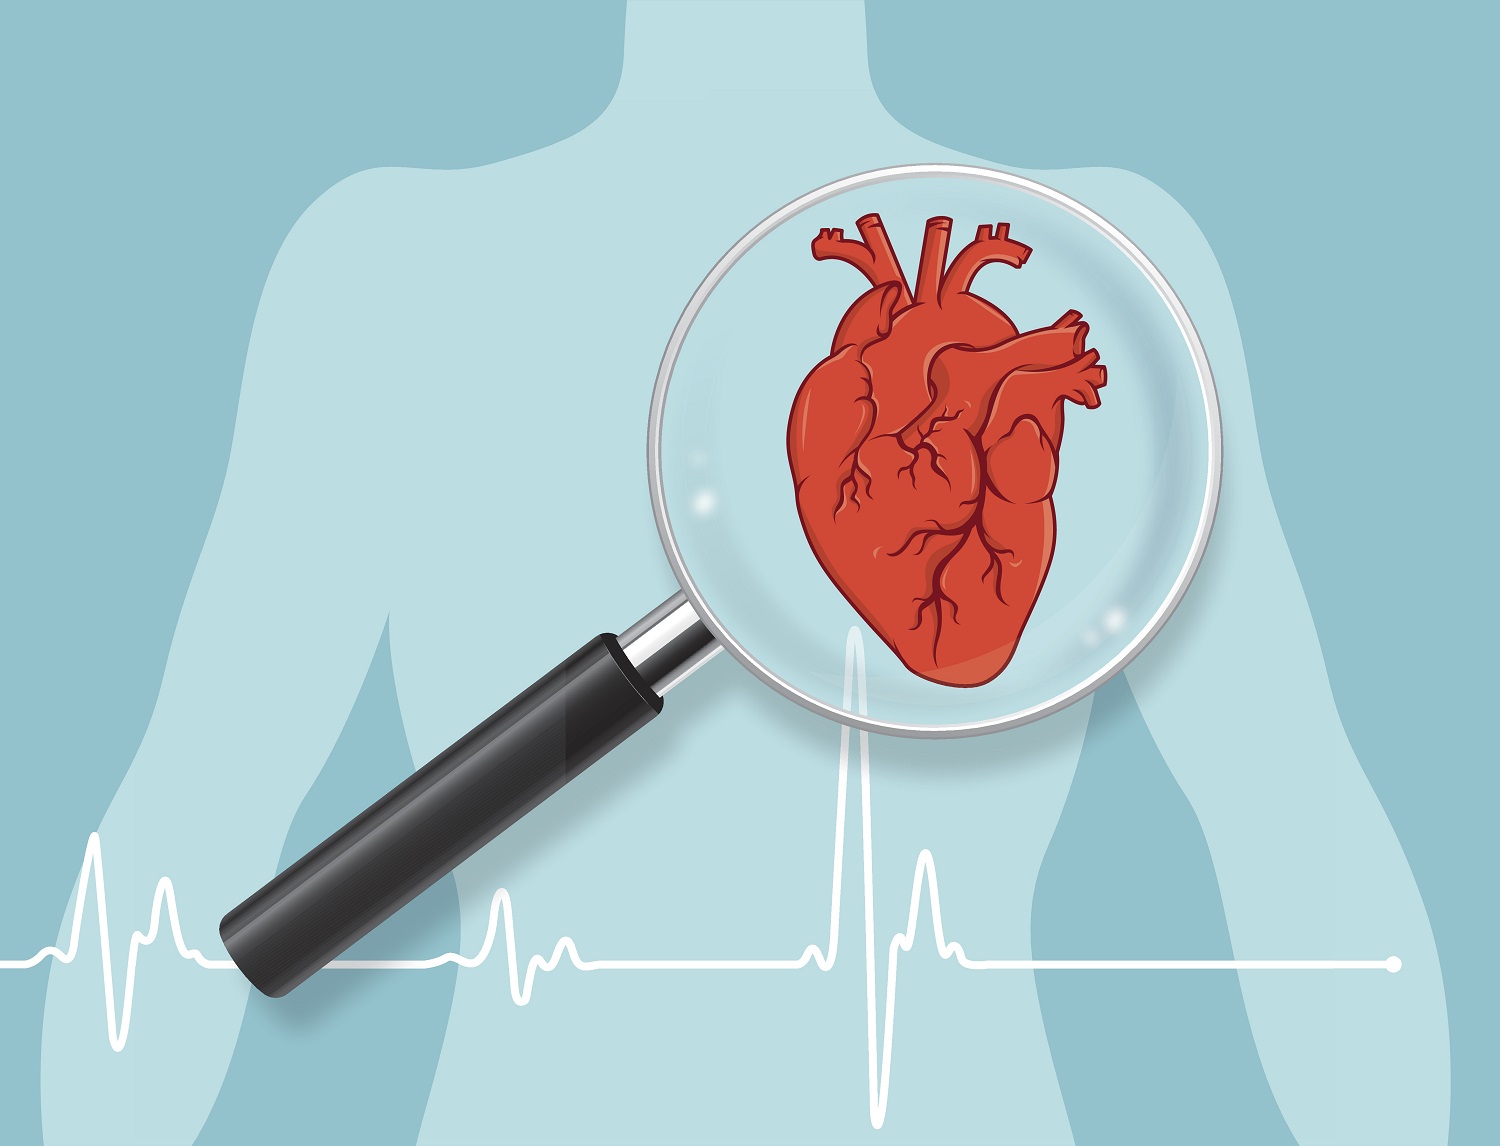 6-12-2018 Erectile Dysfunction Means Increased Risk for Heart Disease Regardless of Other Risk Factors